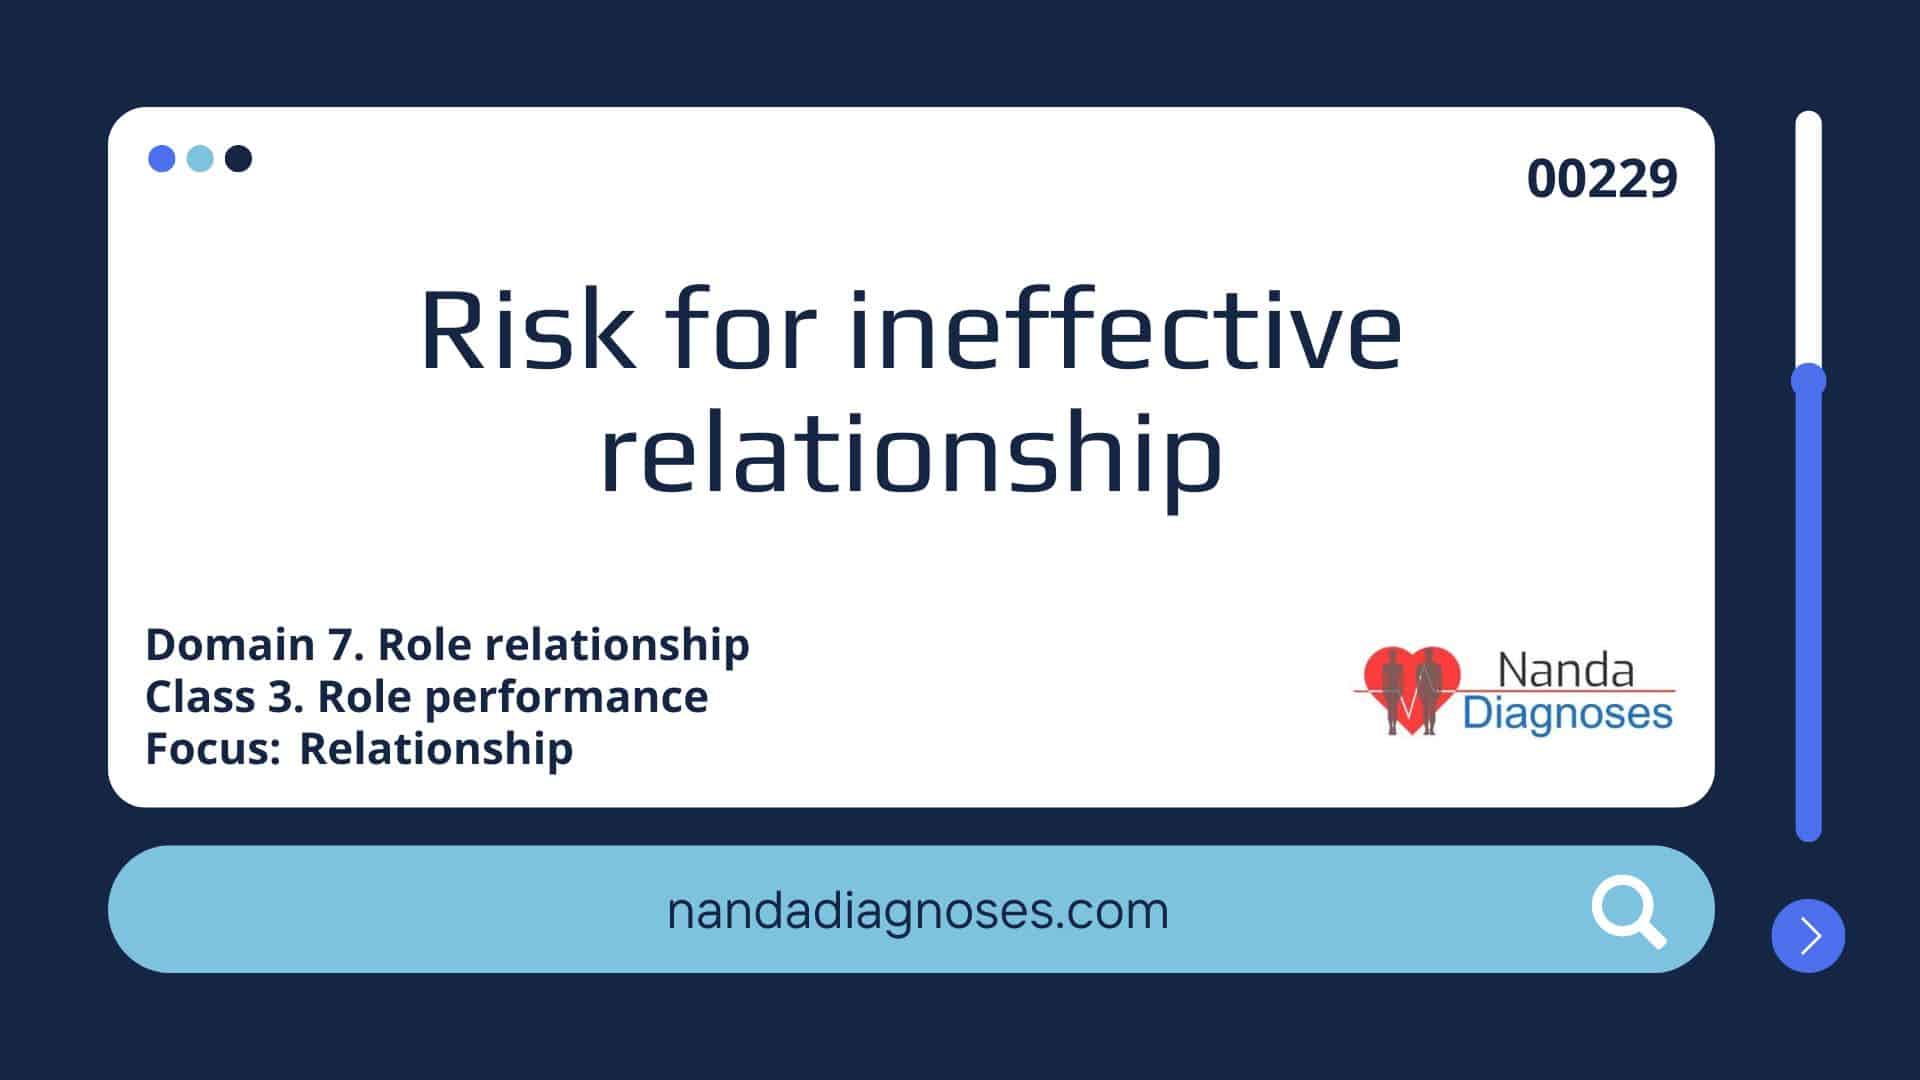 Nursing diagnosis Risk for ineffective relationship